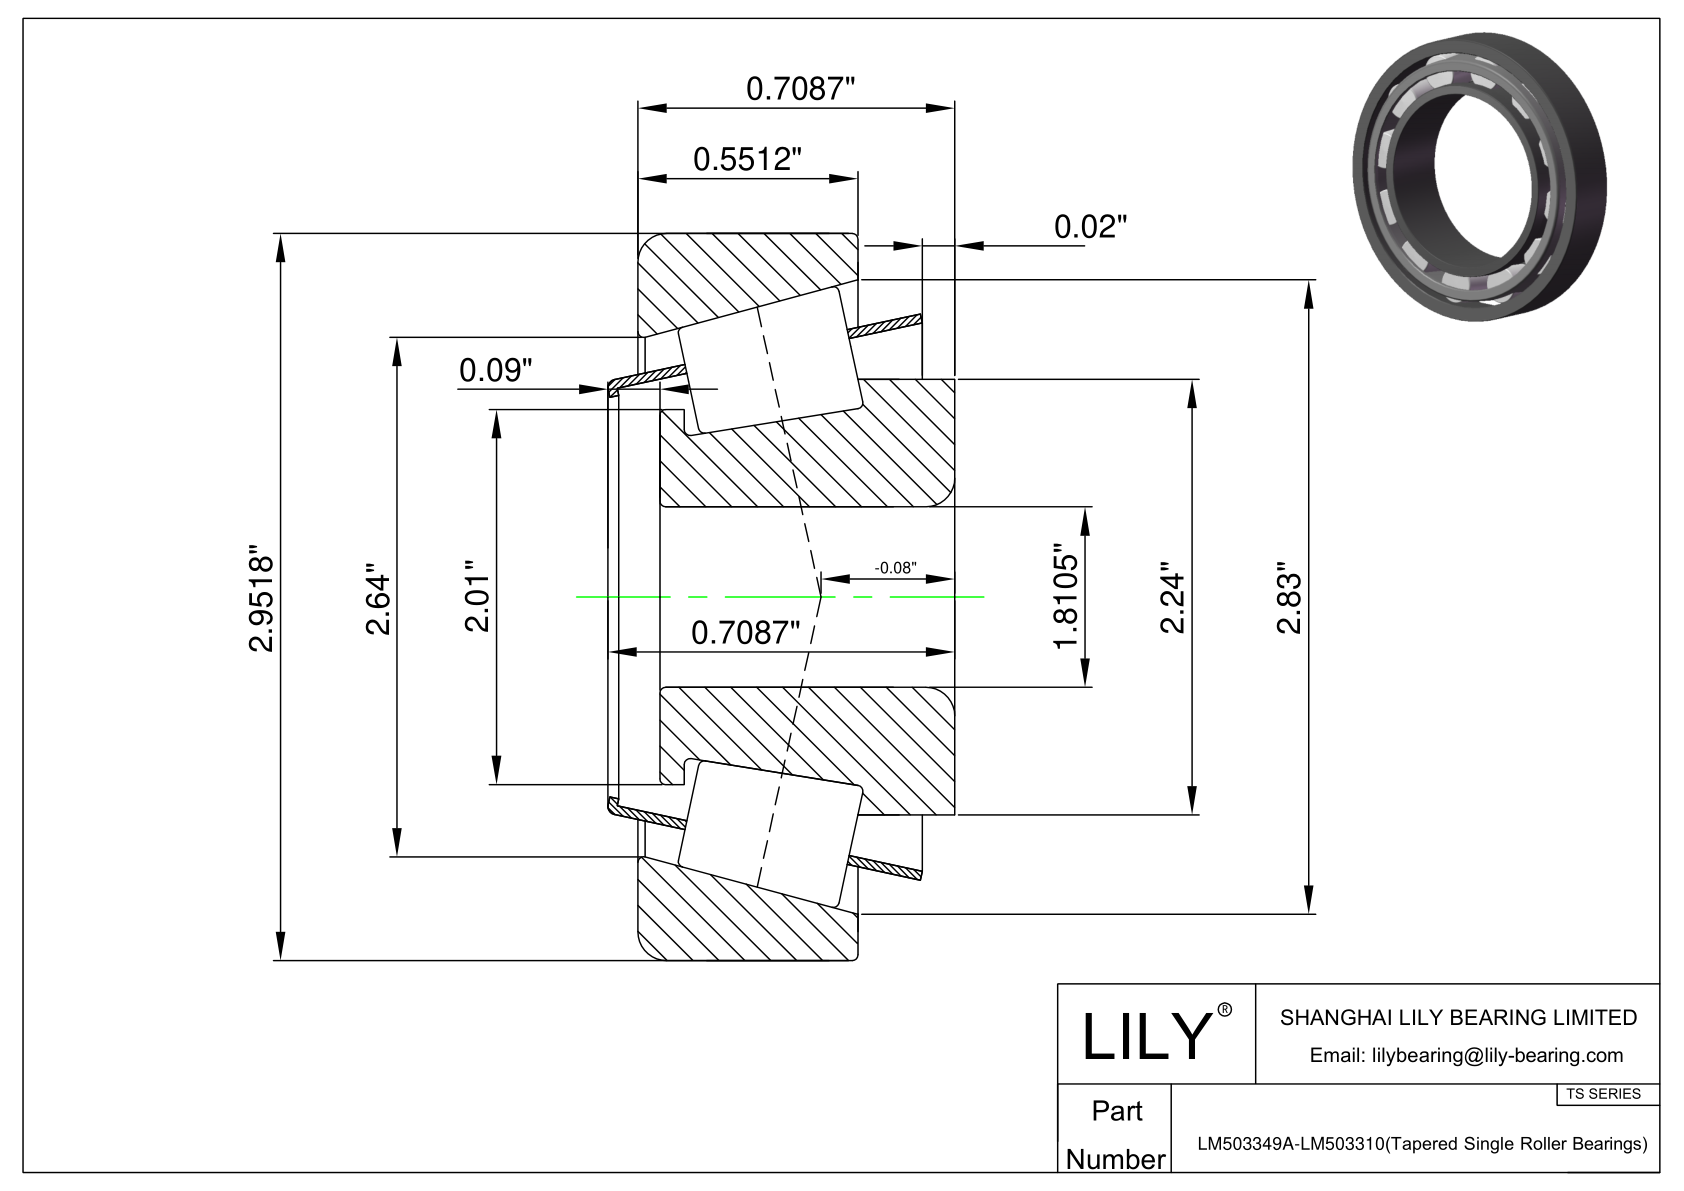 LM503349A-LM503310 TS系列(圆锥单滚子轴承)(英制) CAD图形